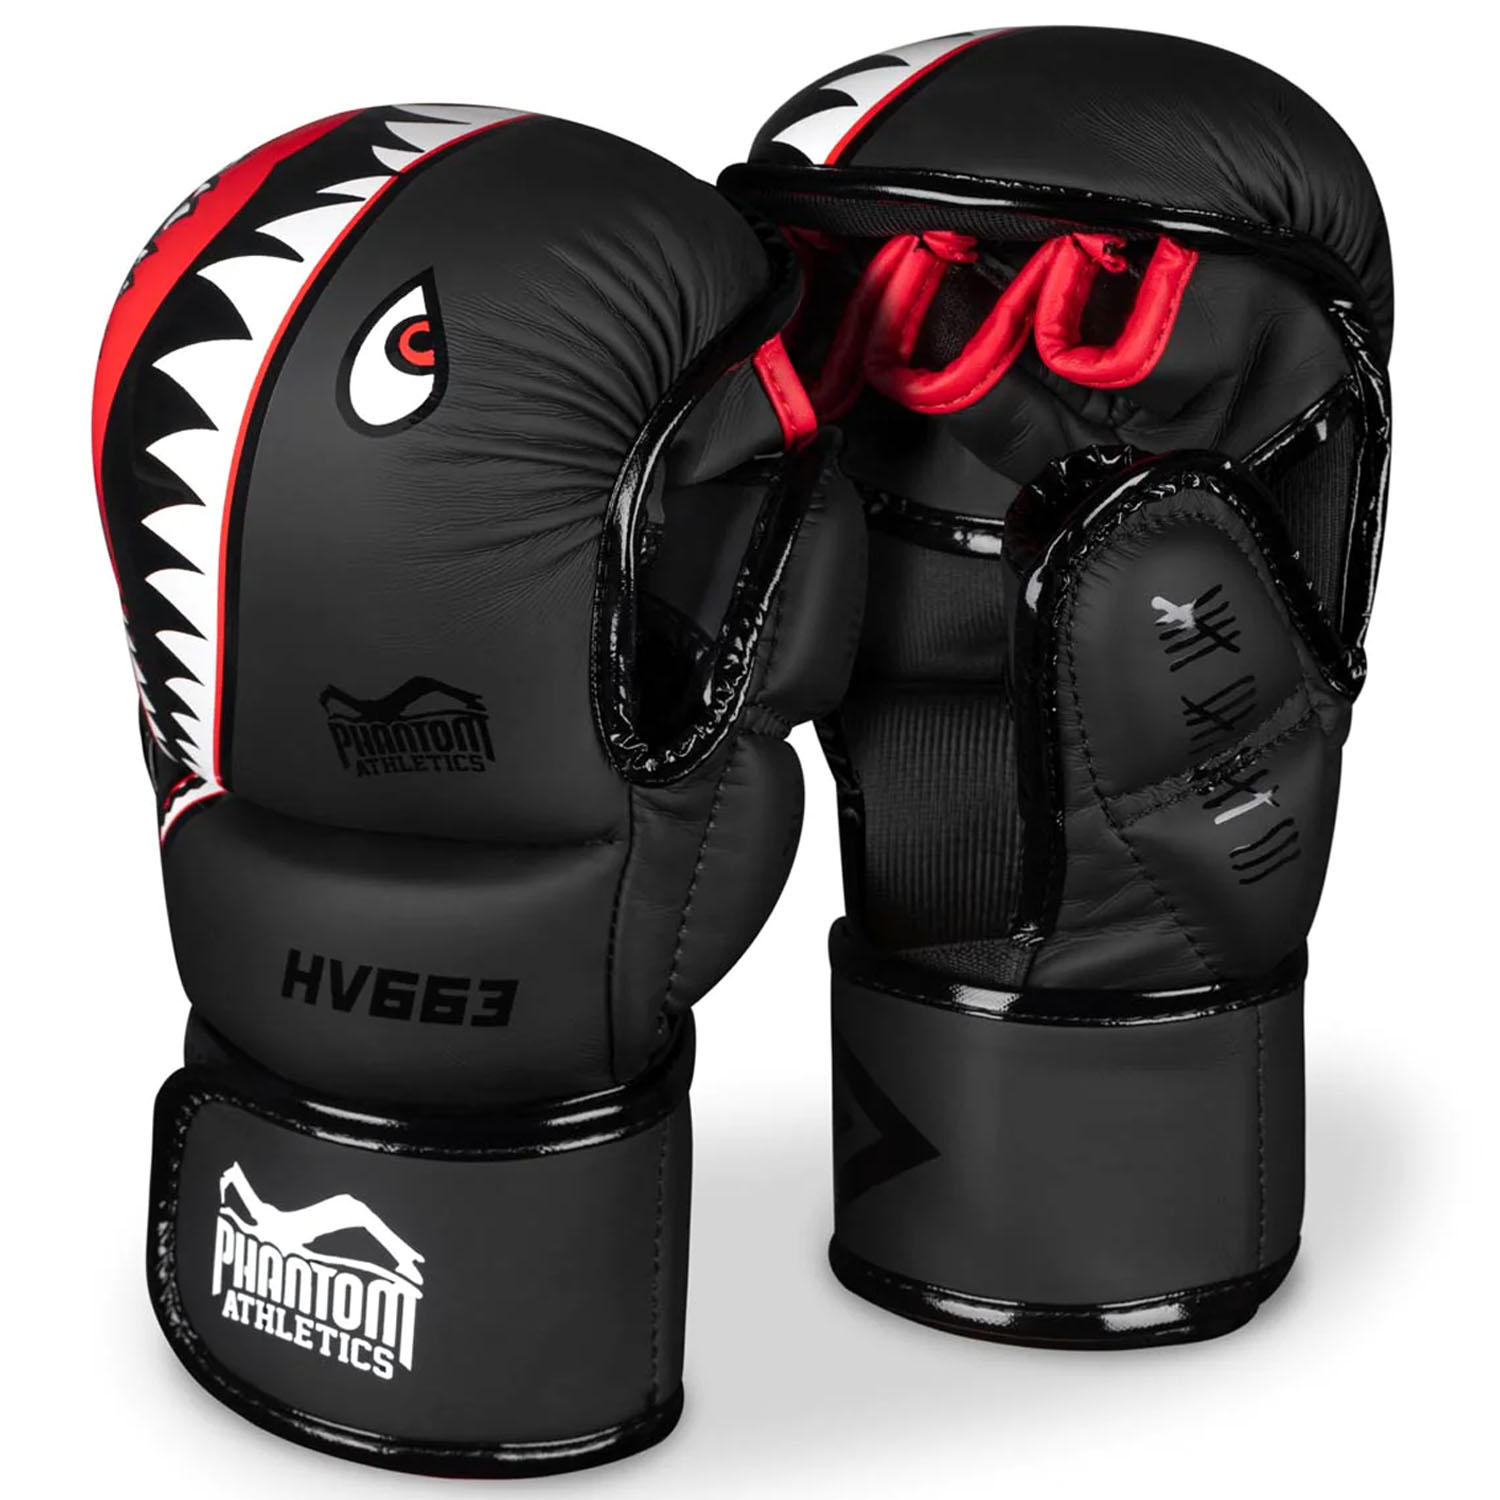 Phantom Athletics MMA Boxing Gloves, Fight Squad, Sparring, black, L/XL